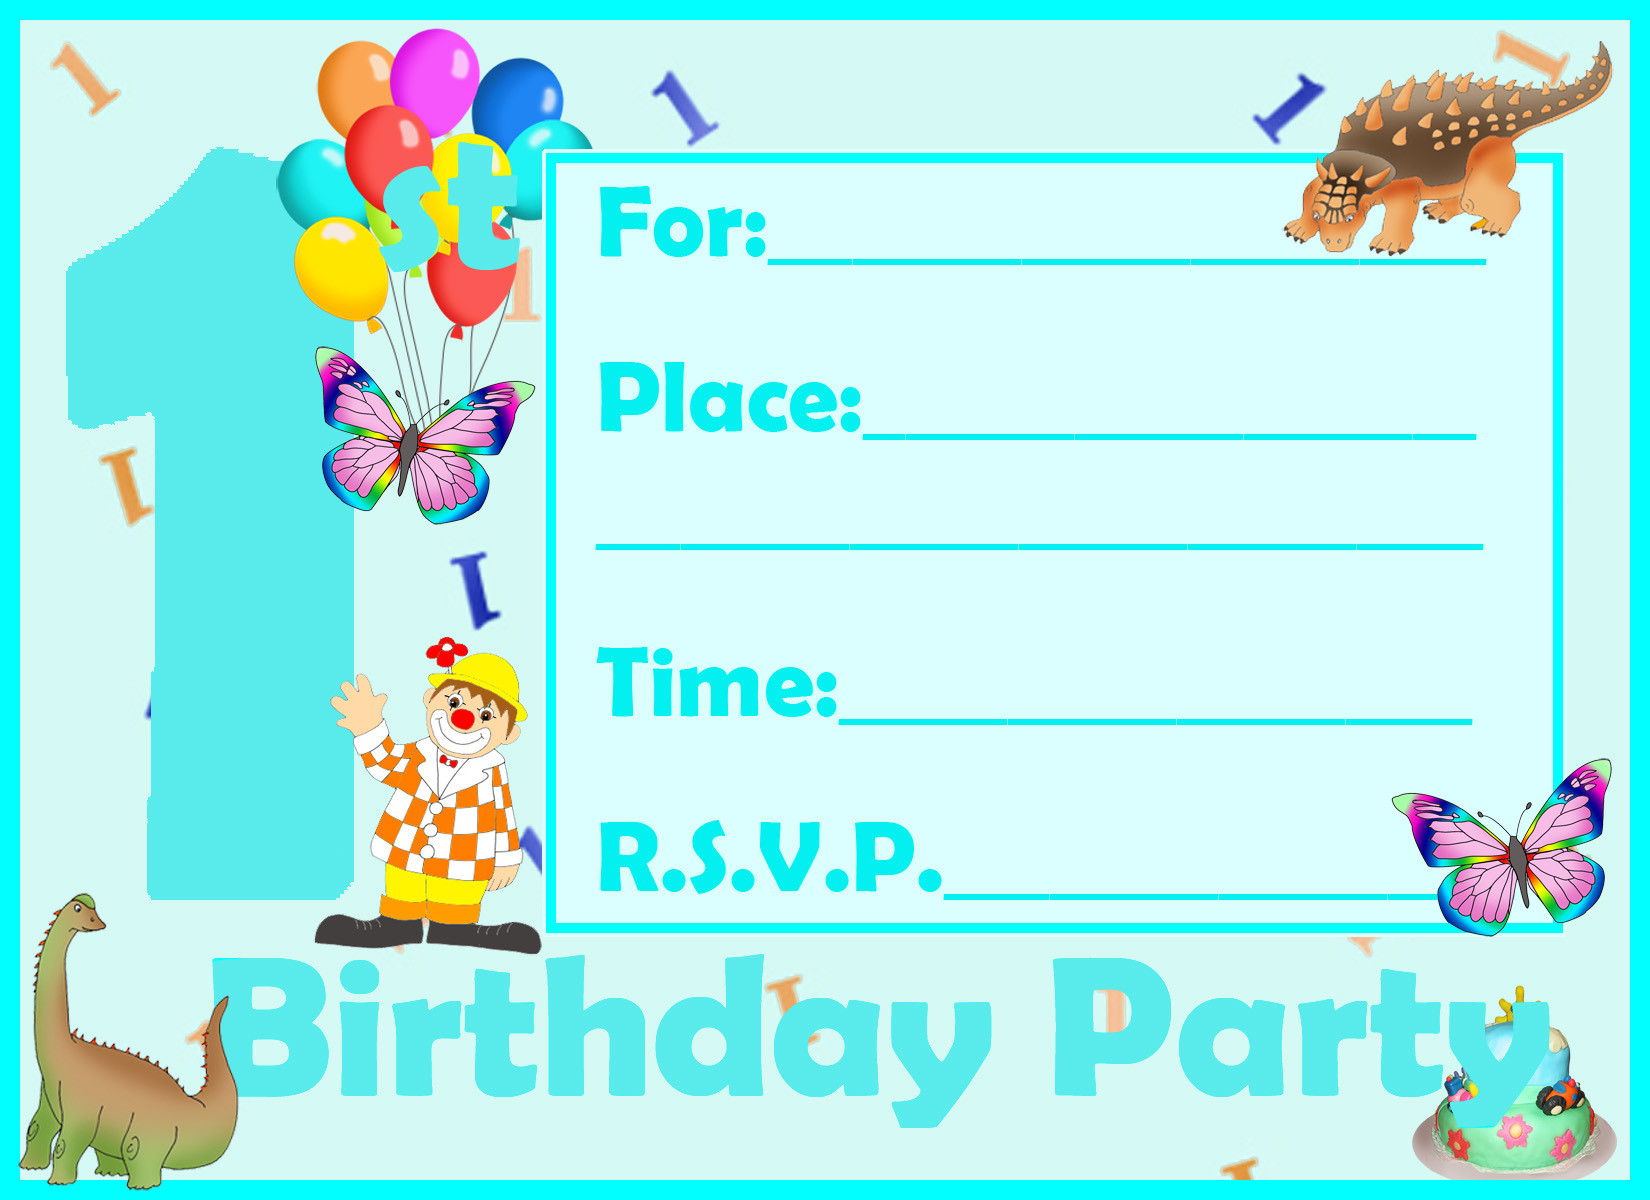 1st Birthday Free Printable Invitations
 FREE Printable First birthday invitations for Boy